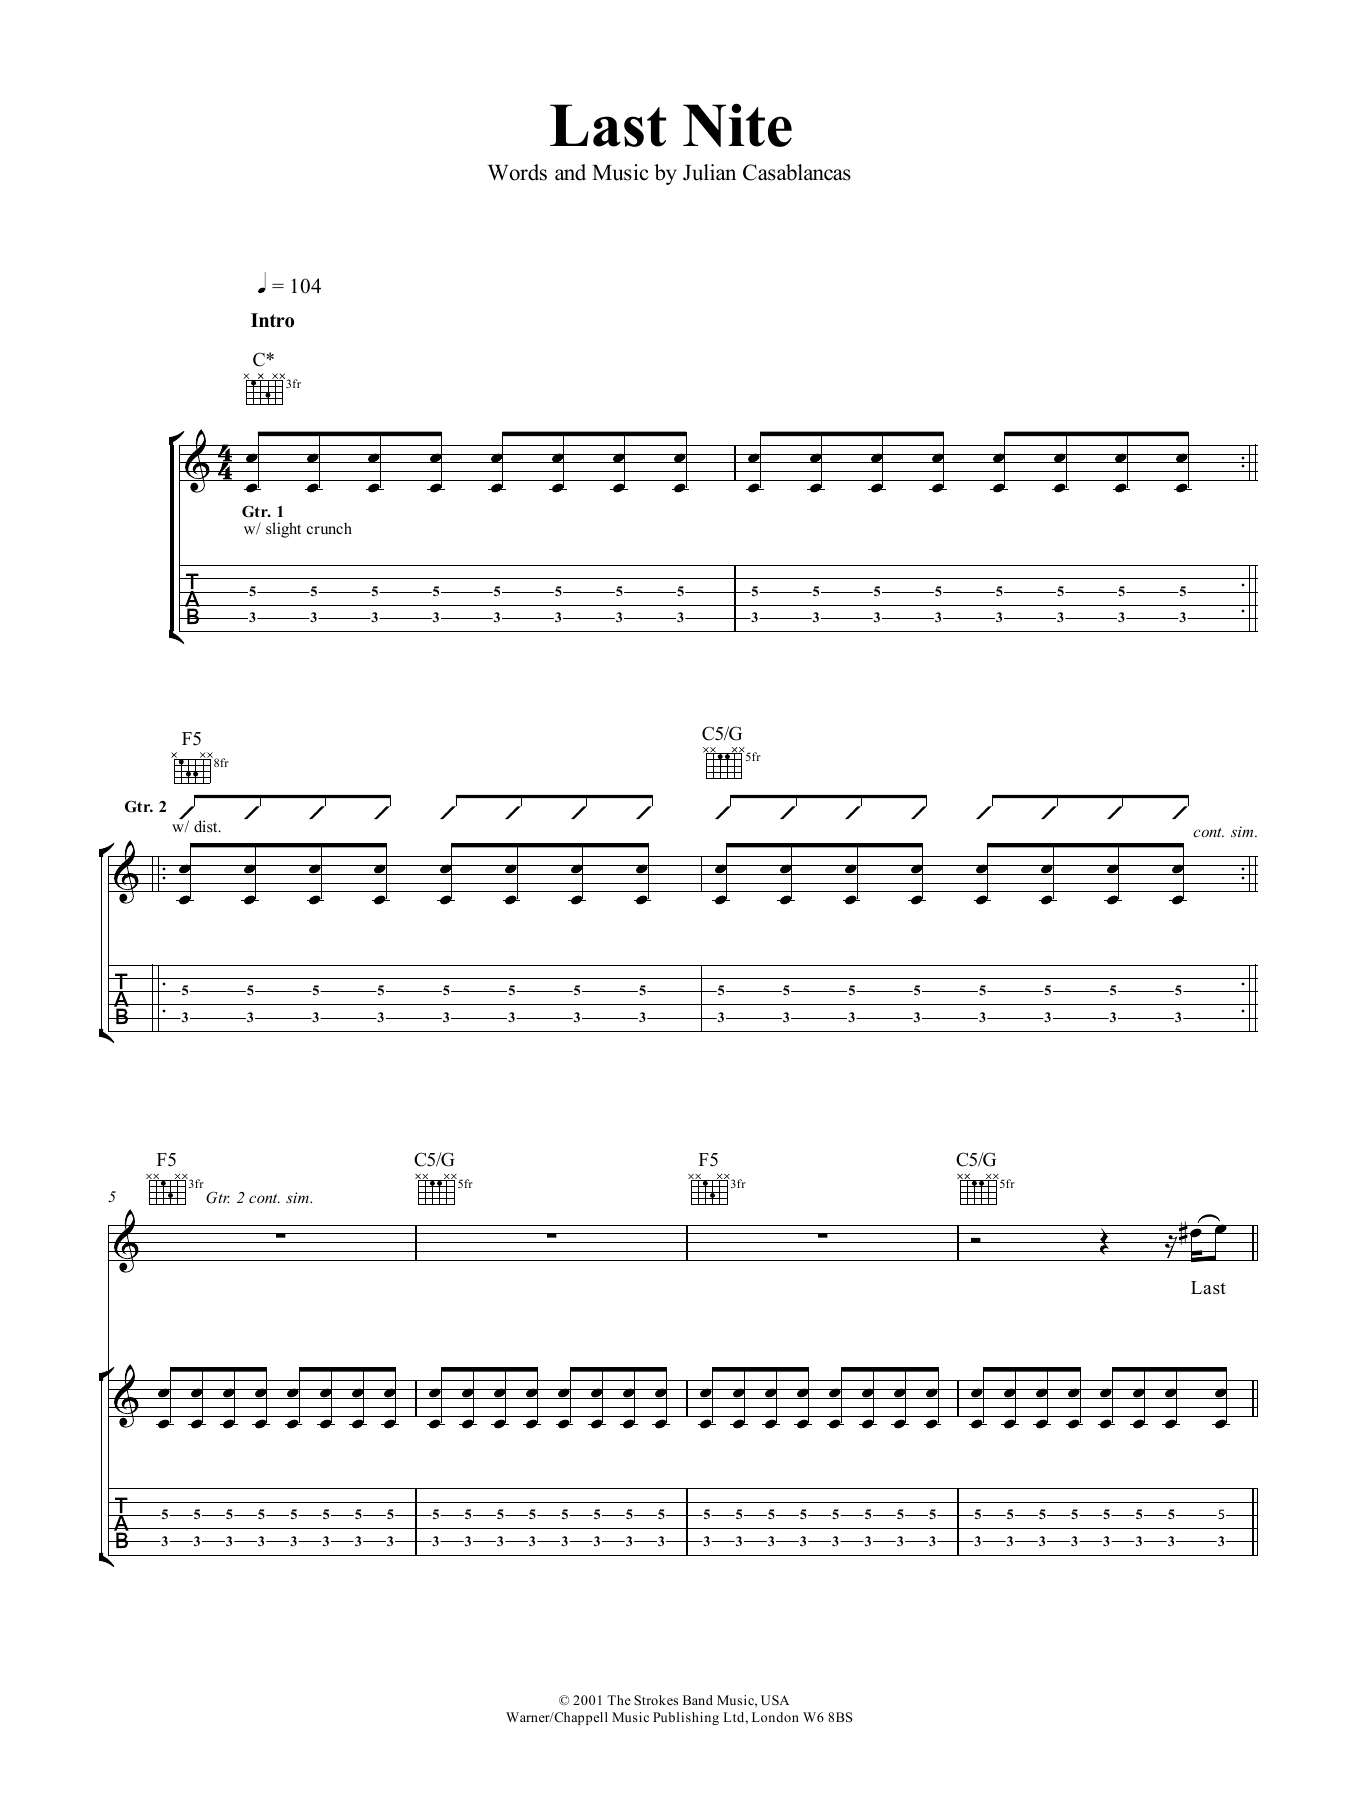 The Strokes Last Nite Sheet Music Notes & Chords for Ukulele Chords/Lyrics - Download or Print PDF